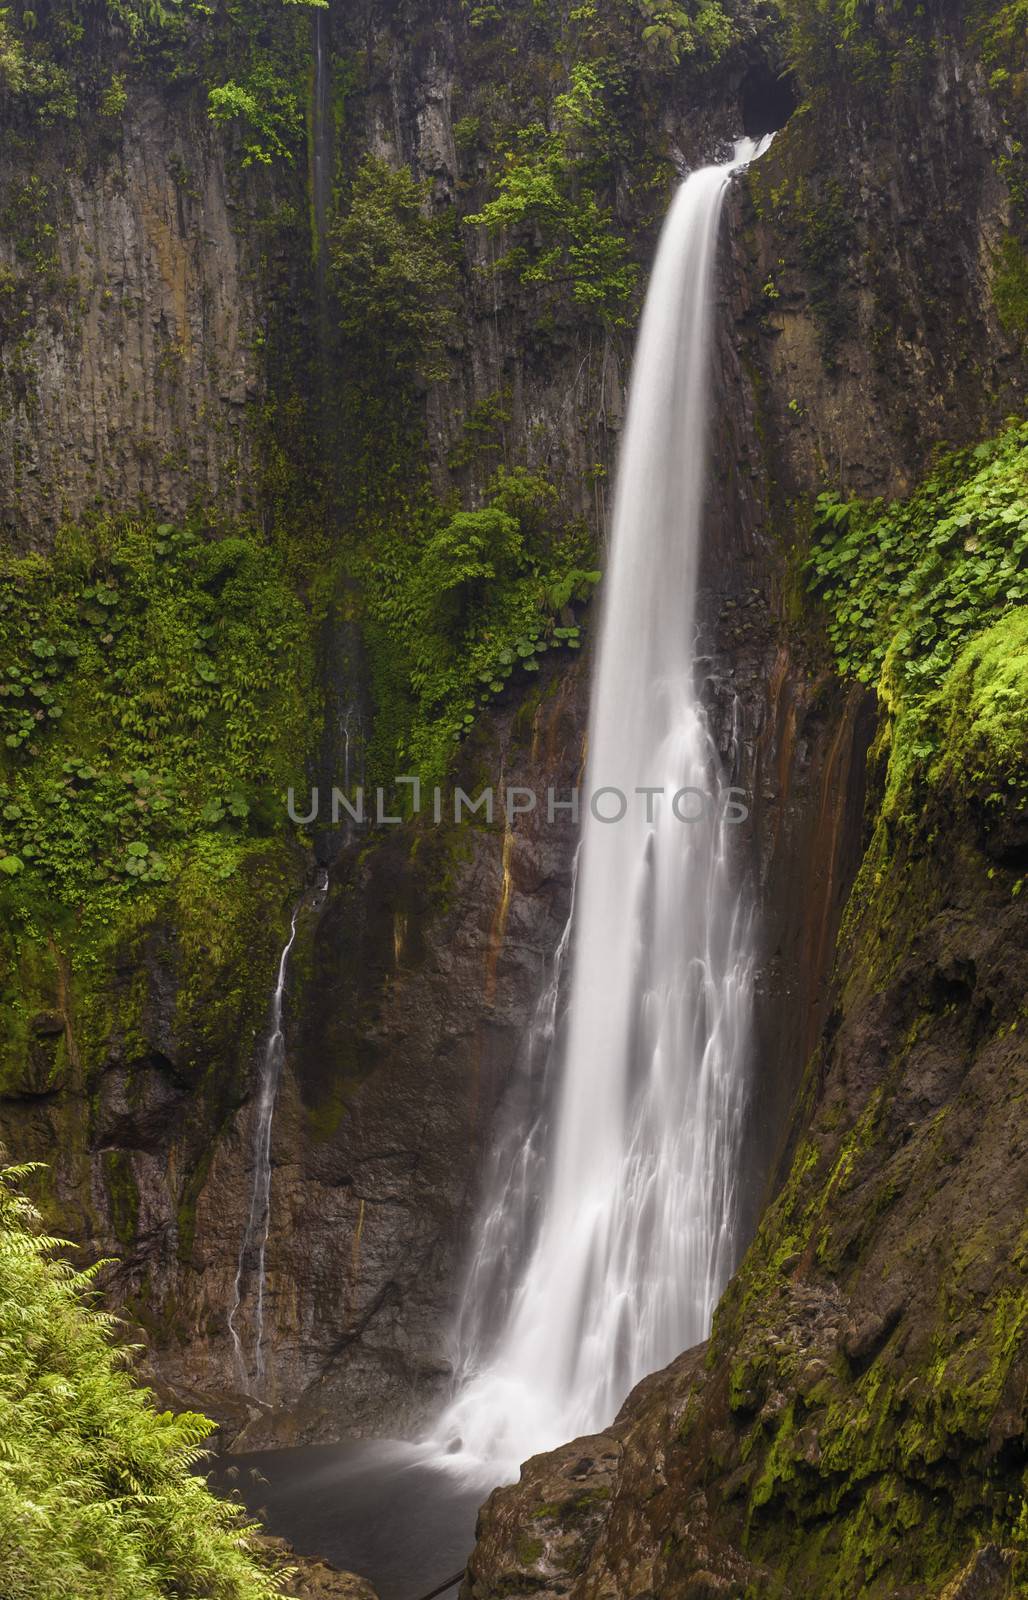 Catarata del Toro waterfall in Costa Rica drops 300 feet into the gorge below.